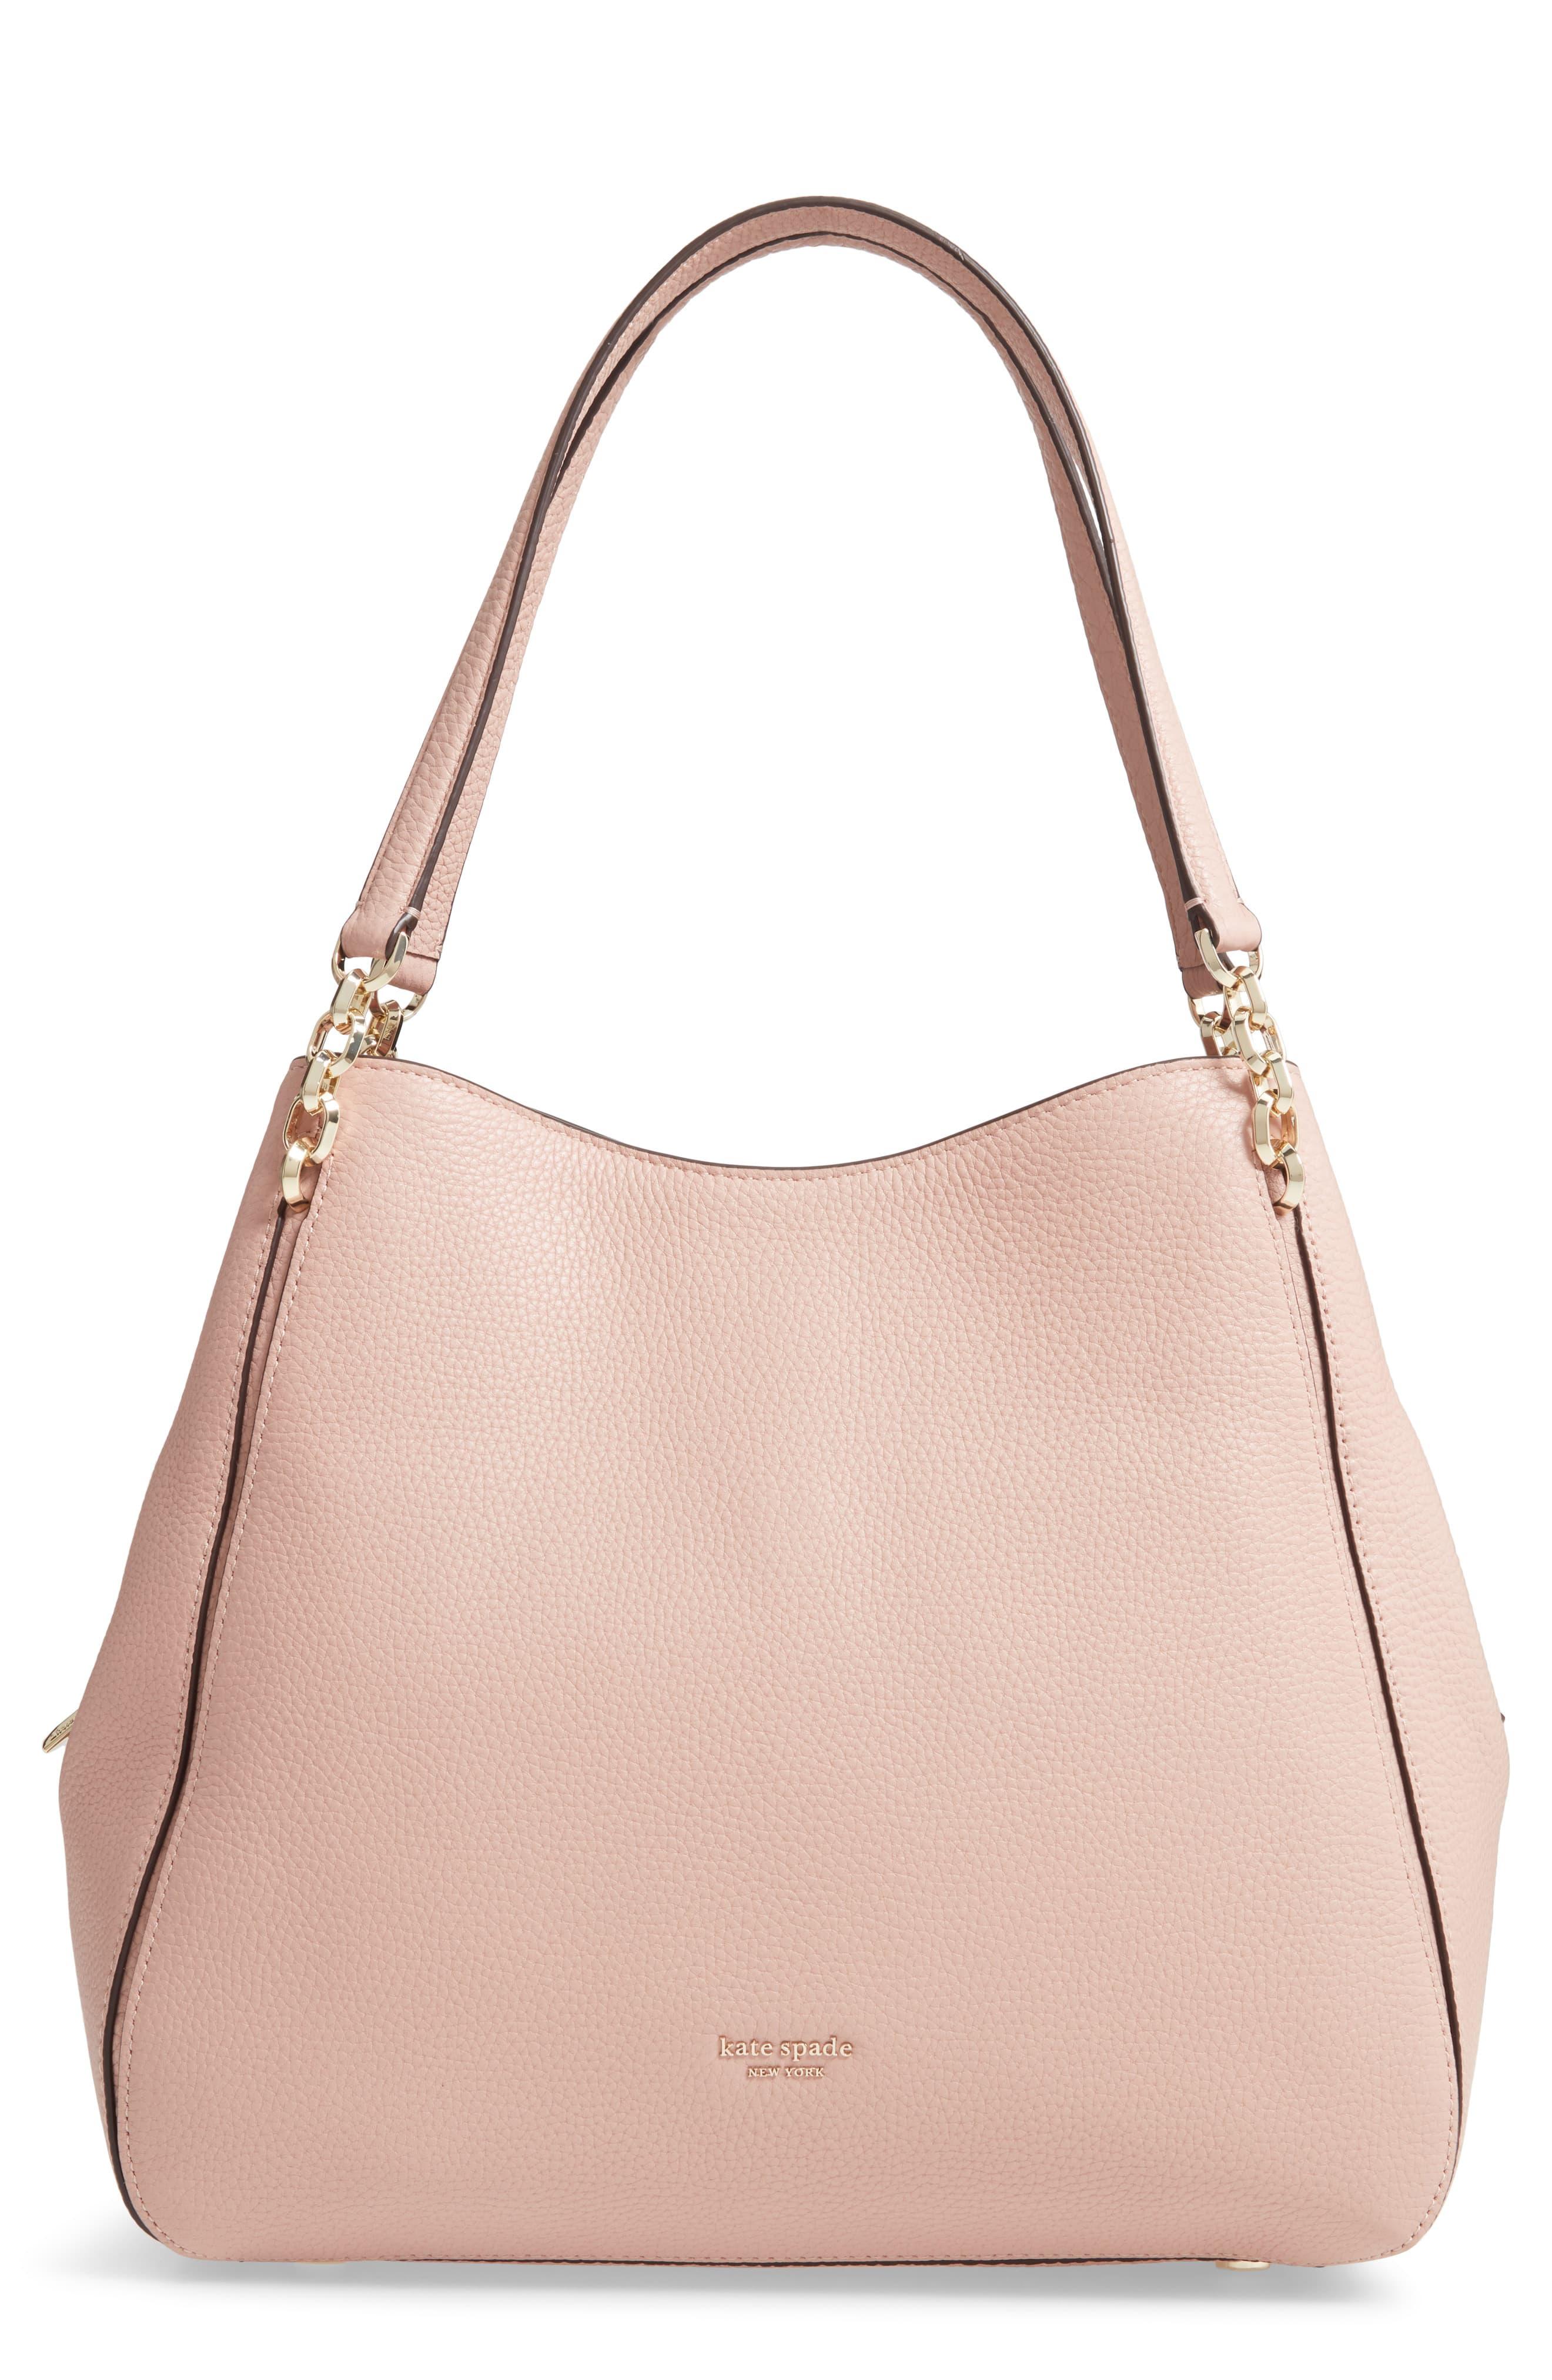 Kate Spade Large Hailey Leather Shoulder Bag in Pink - Lyst